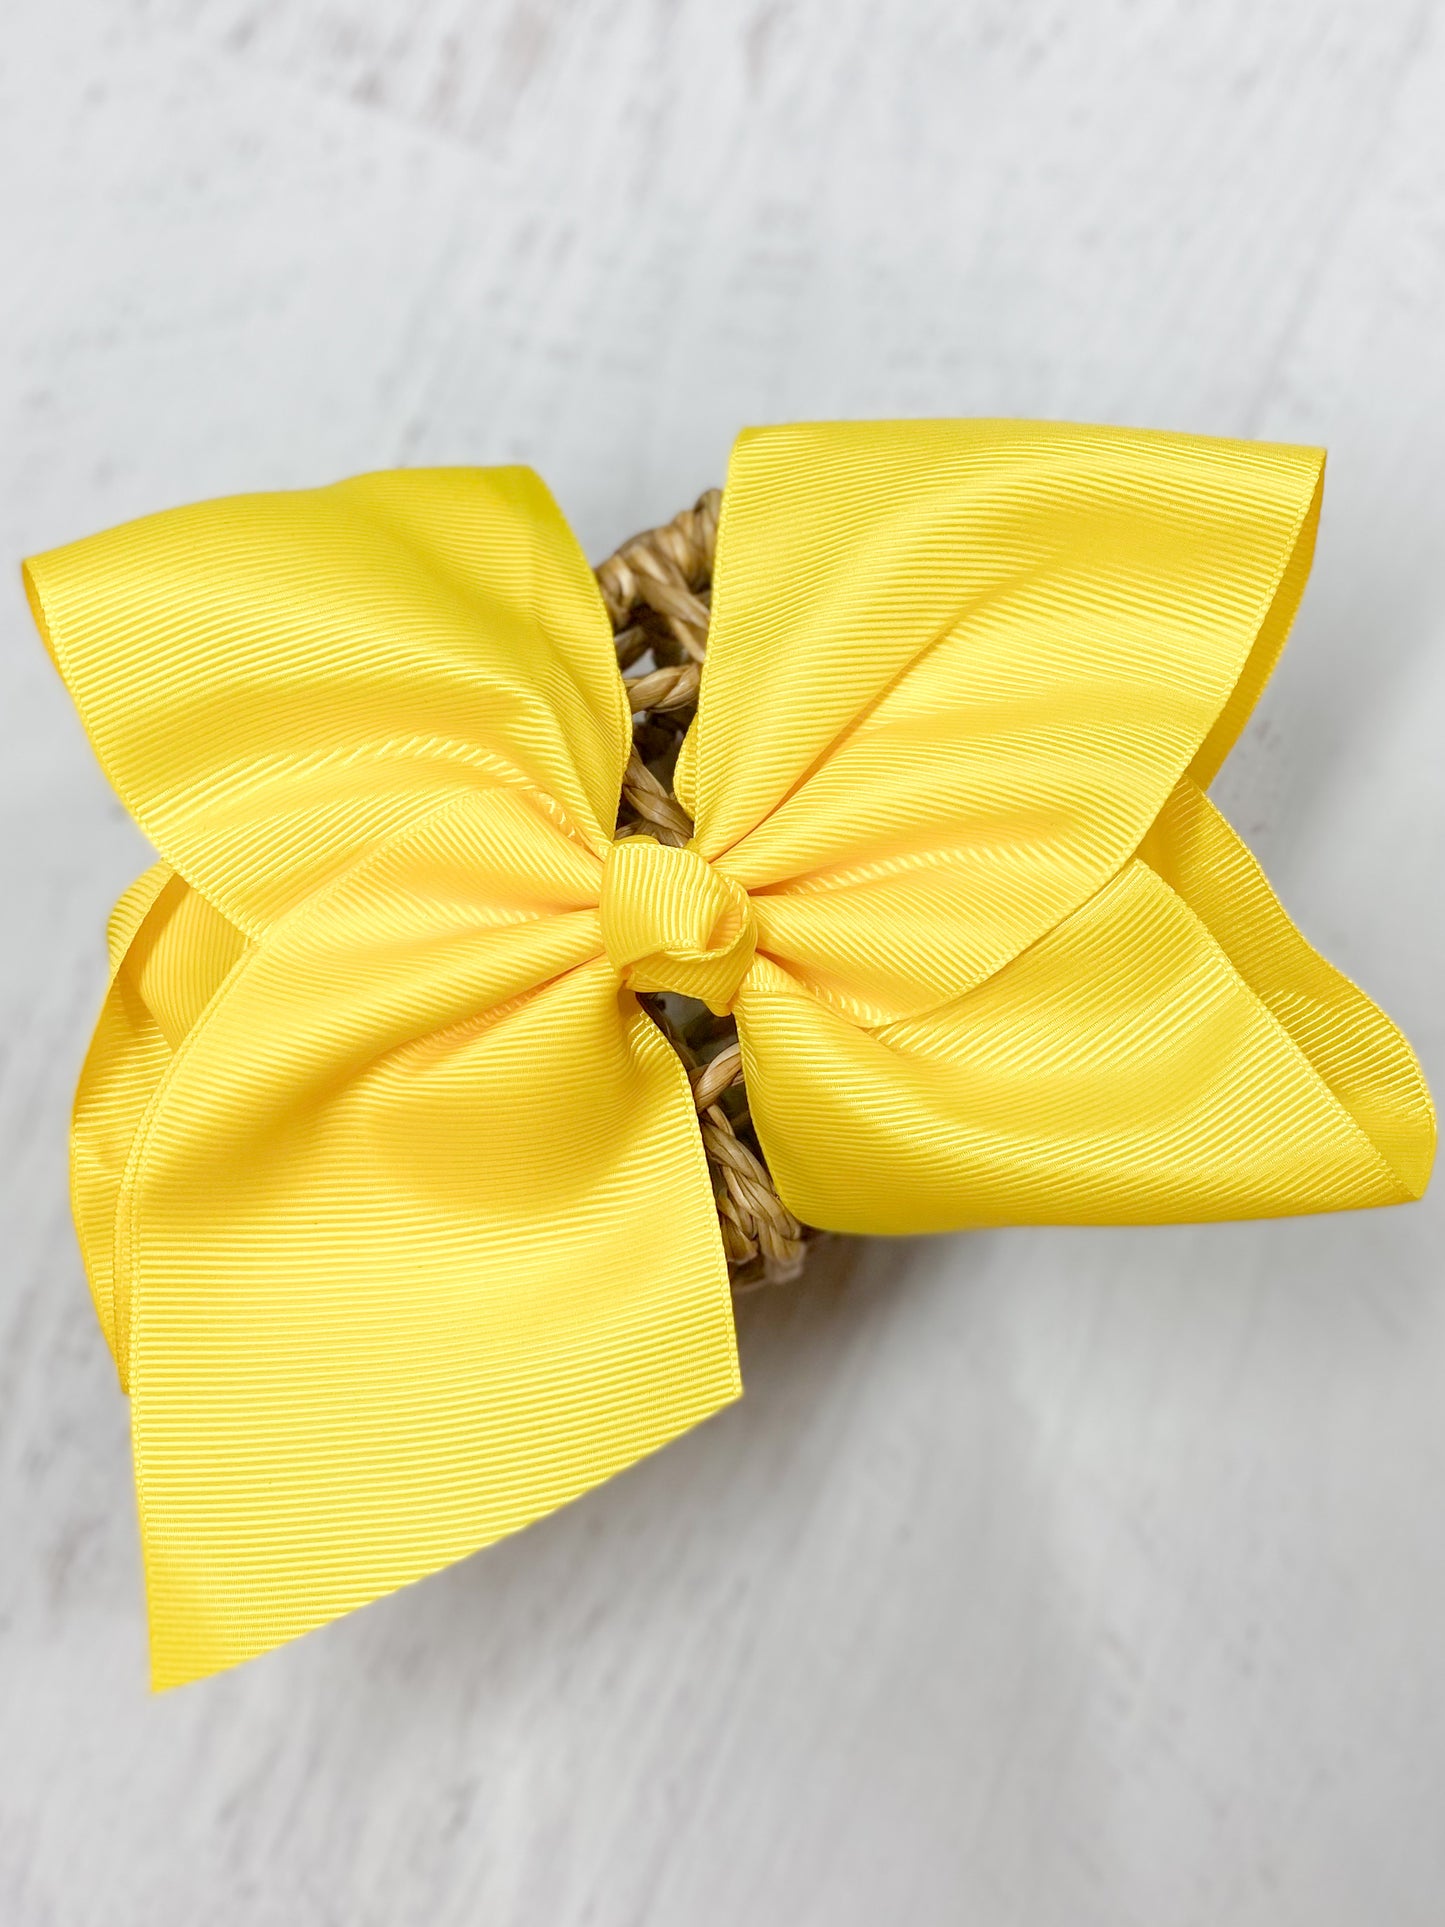 Lemon Yellow Big Bows - Texas Size Grosgrain Hair Bow